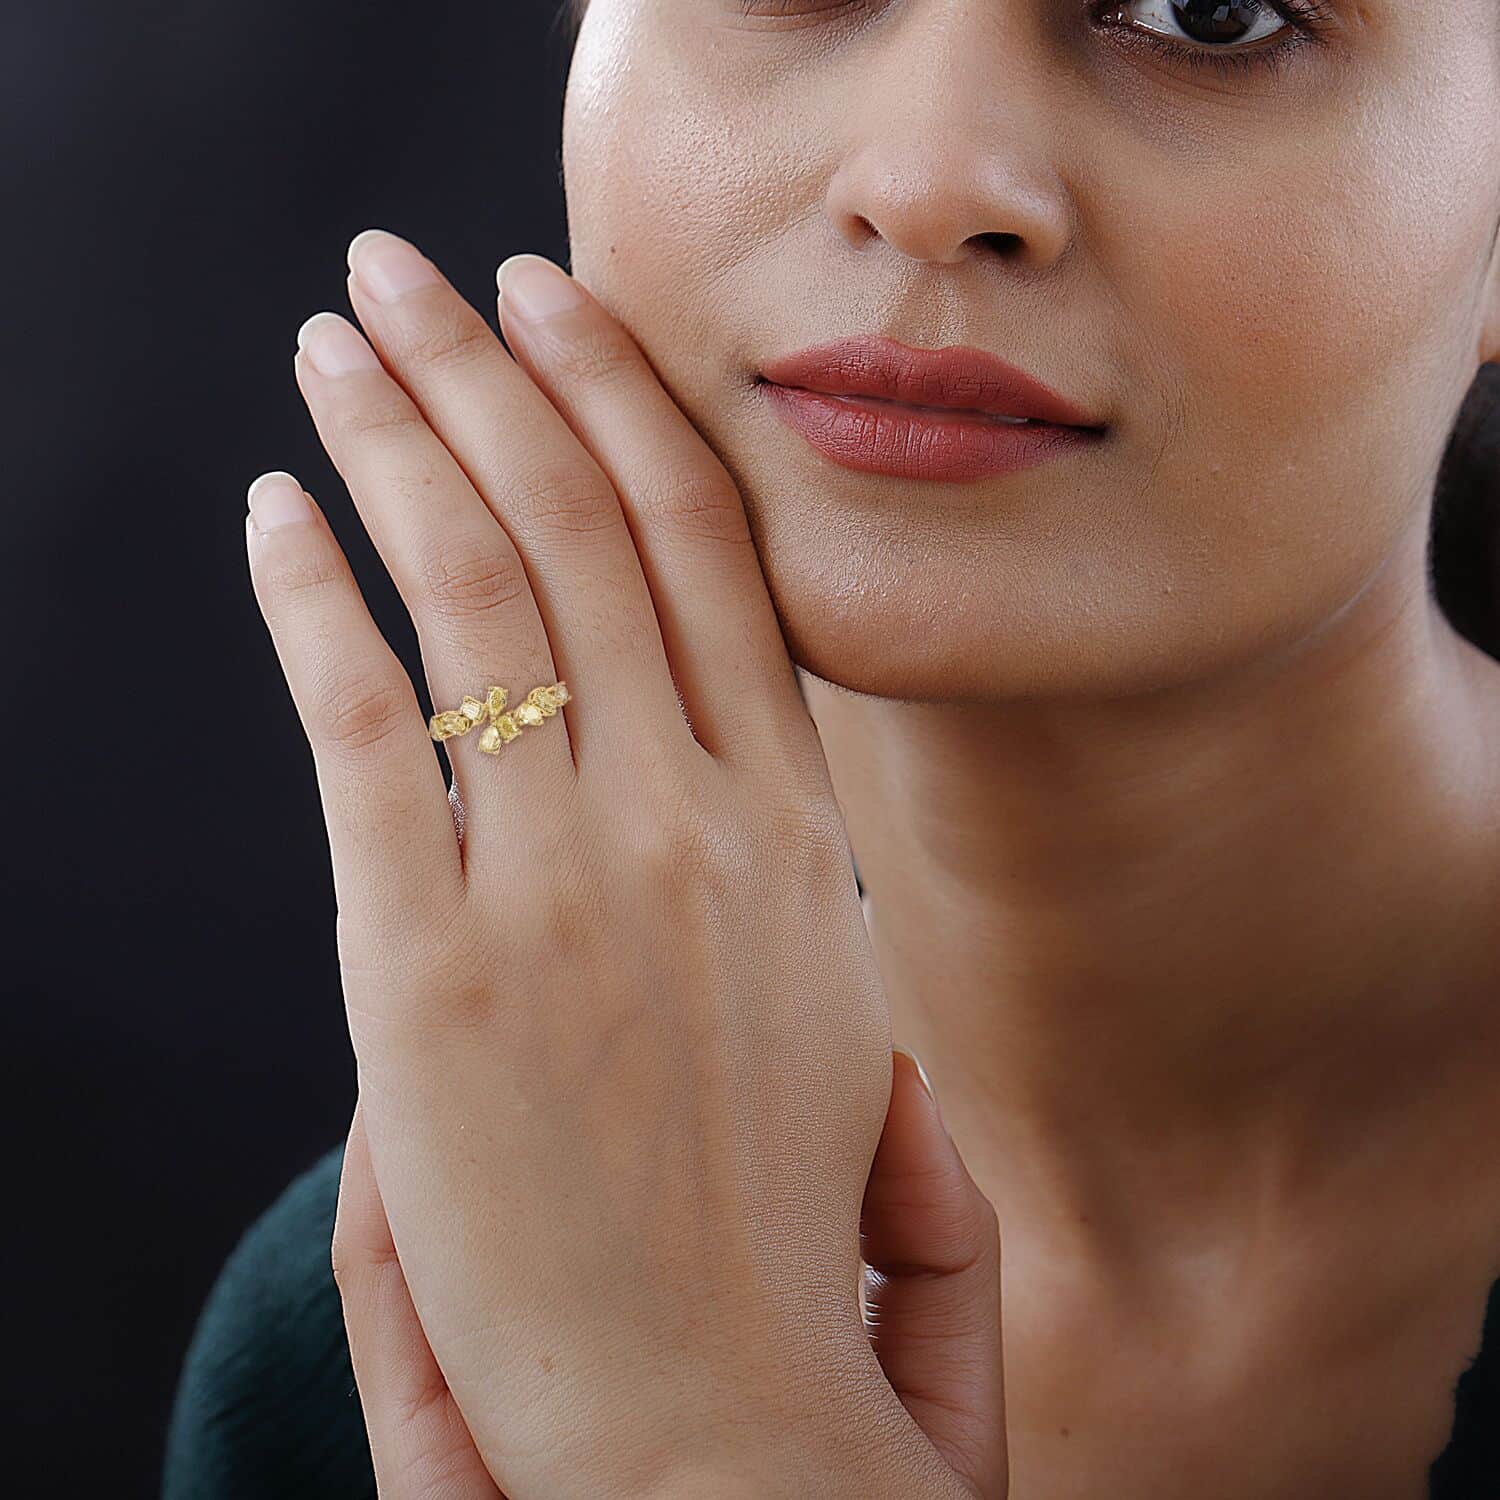 Ankur Treasure Chest Modani 18K Yellow Gold Natural Yellow Diamond (I1)  Ring (Size 8.0) (Del. in 10-15 Days) 1.30 ctw